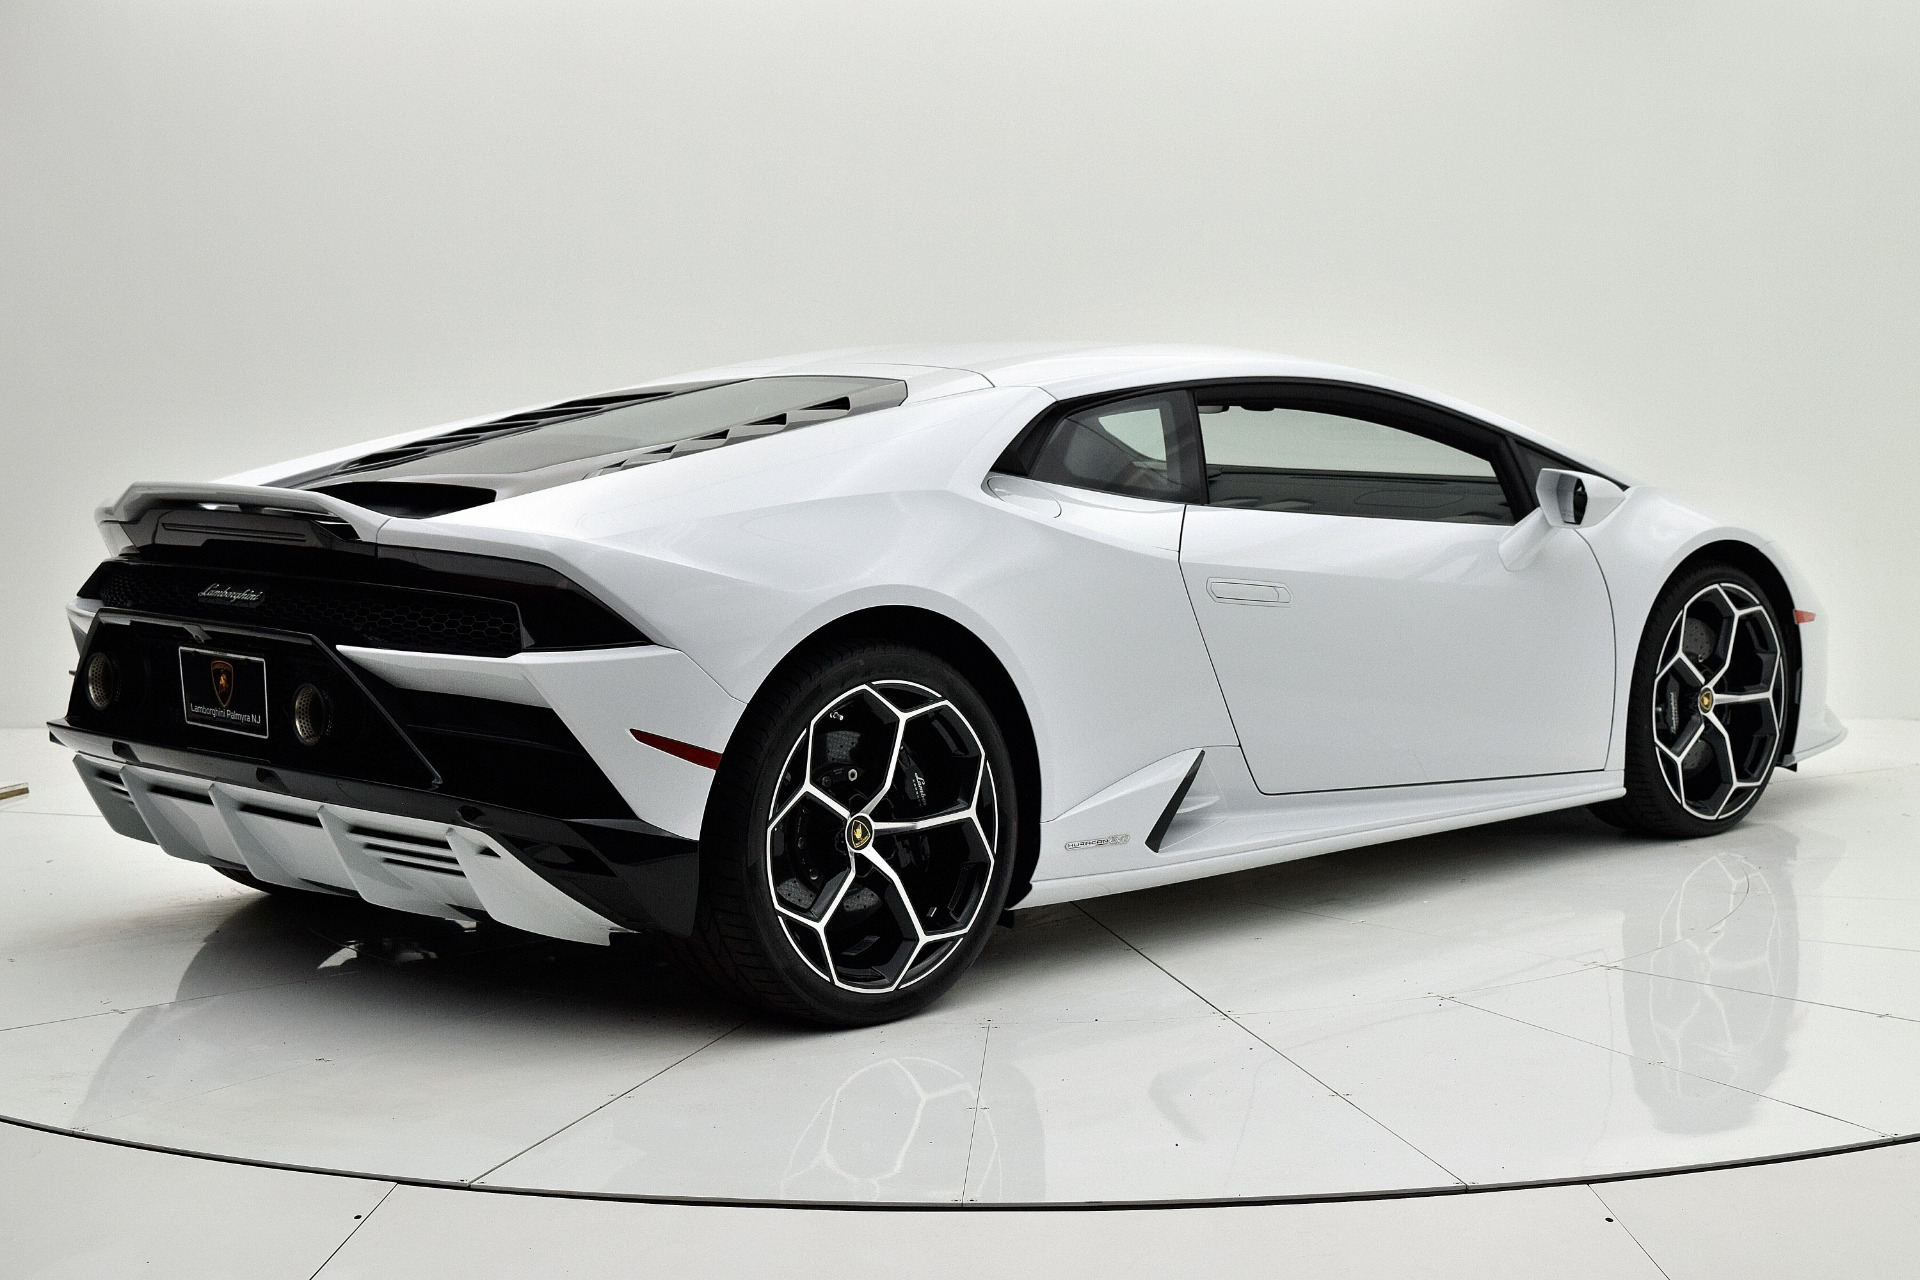 New 2020 Lamborghini Huracan EVO LP 640-4 EVO For Sale ...